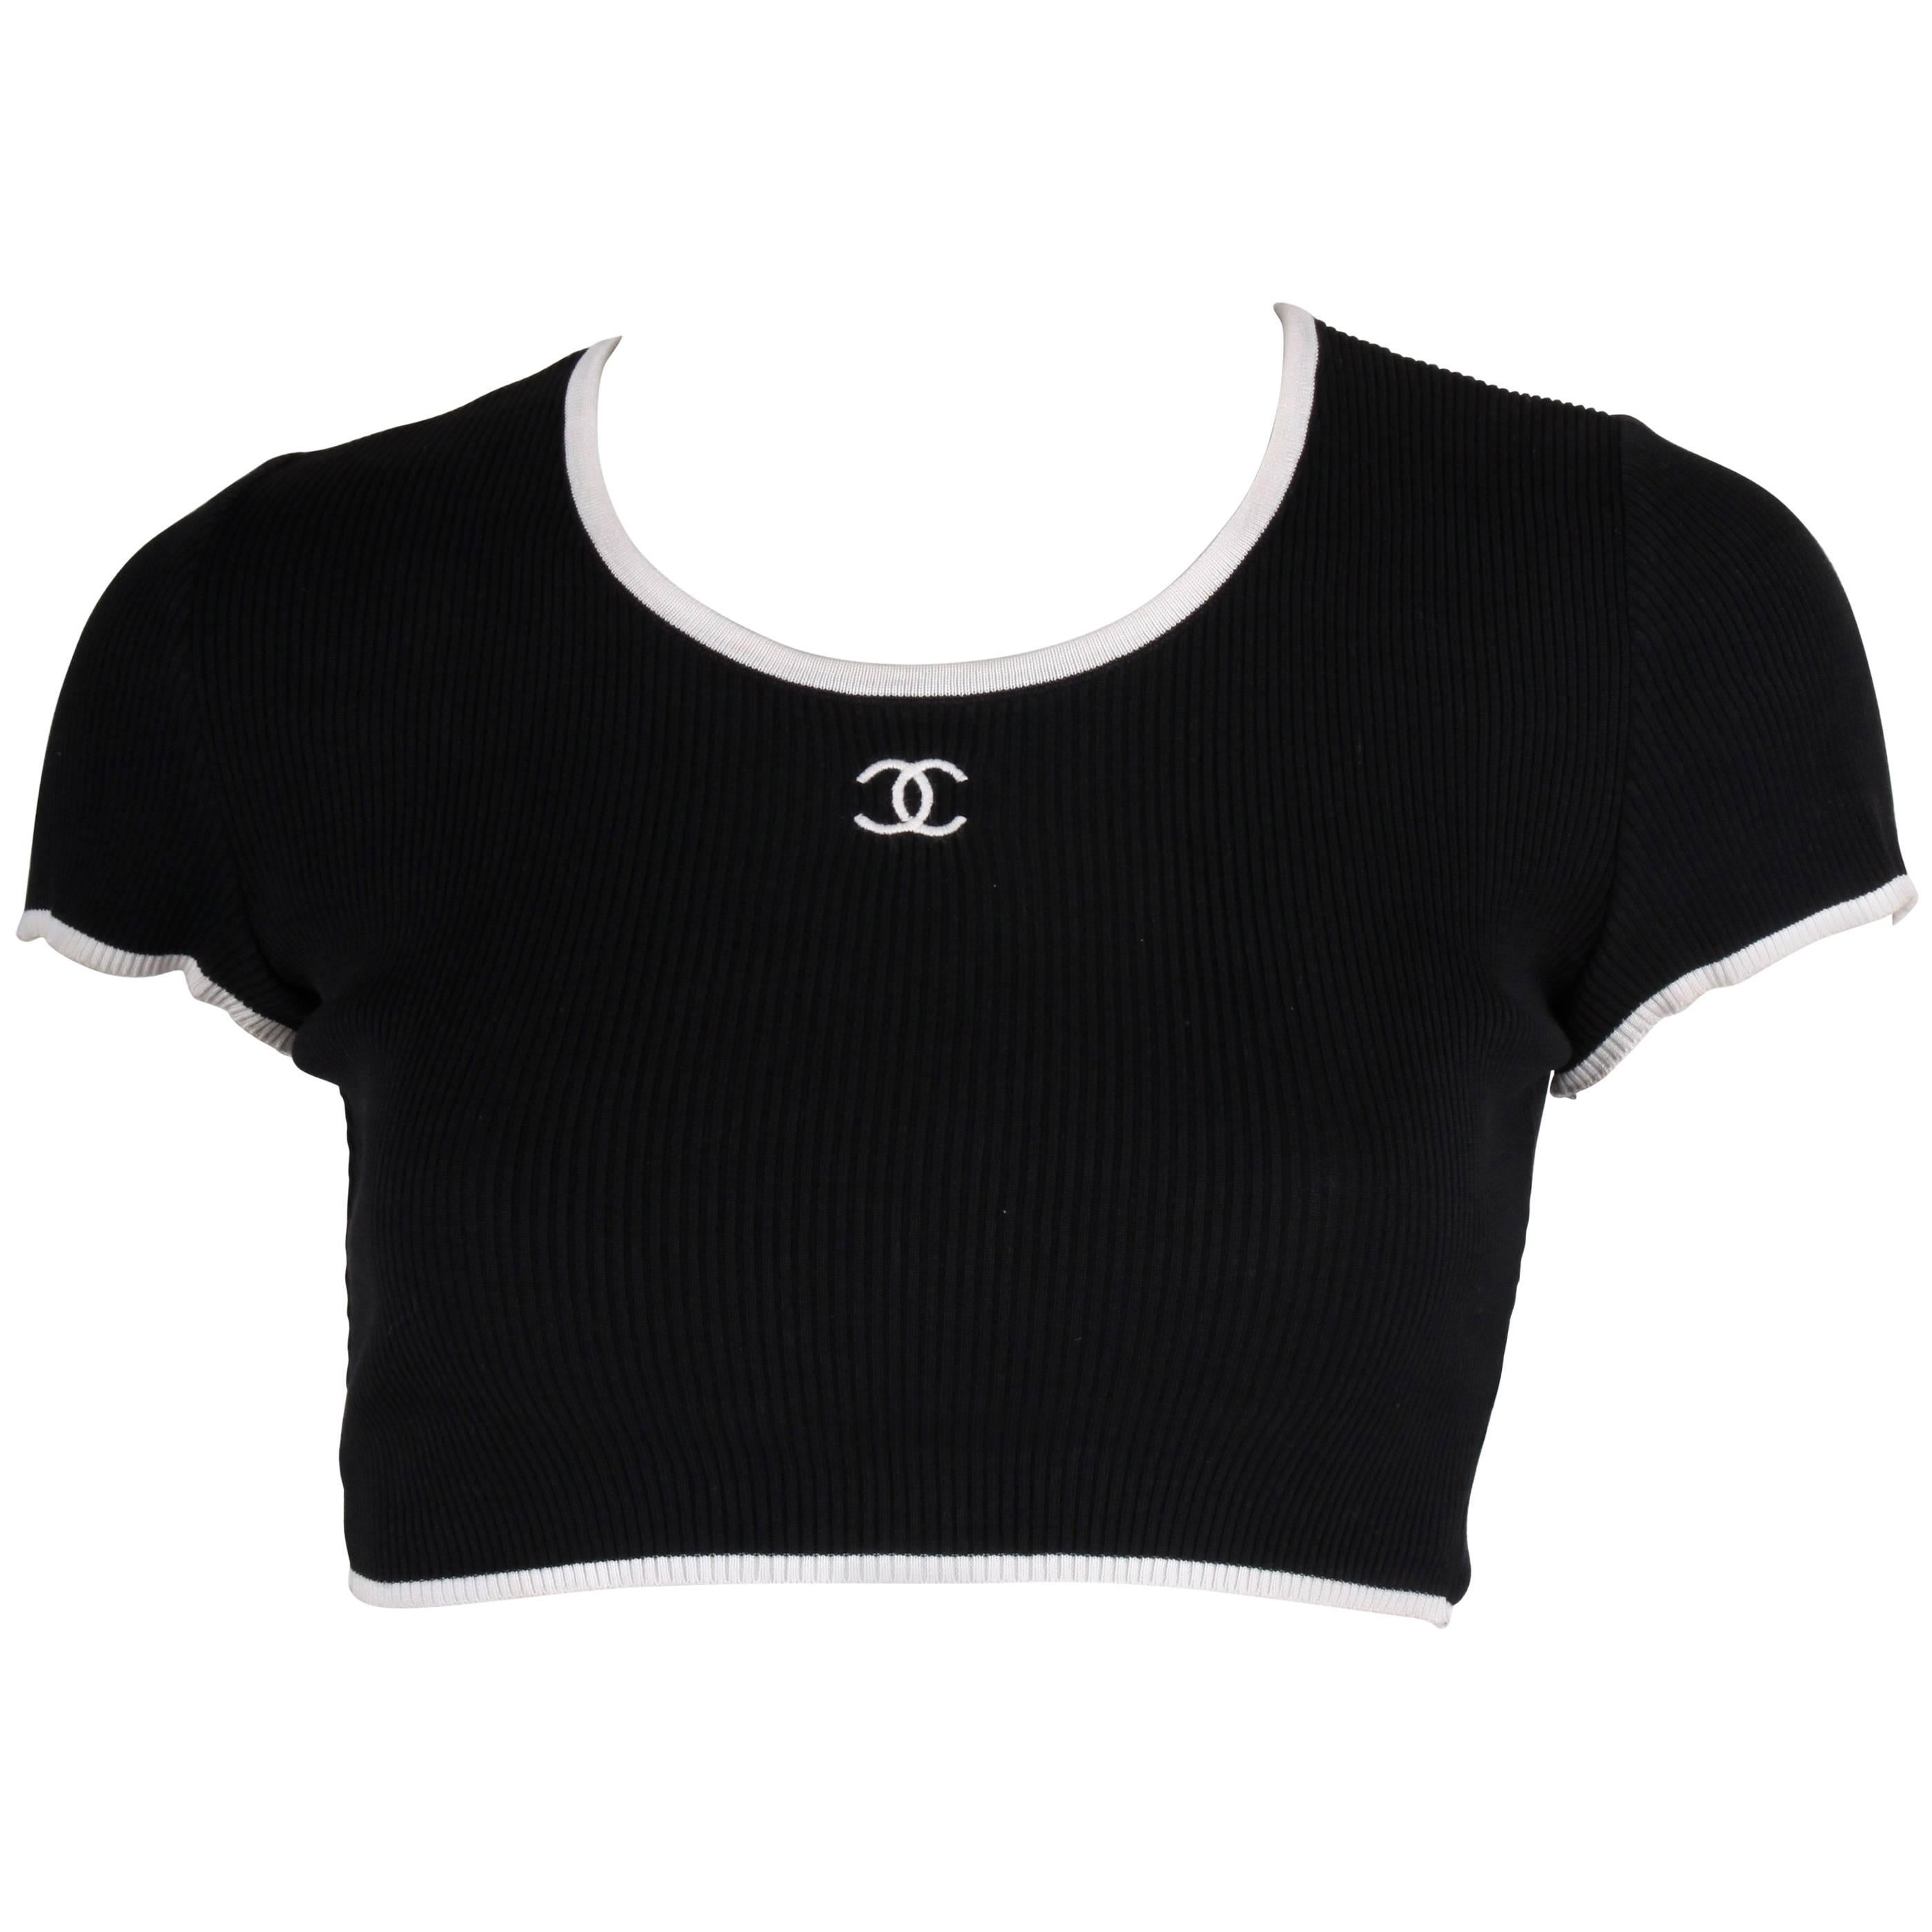 Chanel Crop Top - black/white